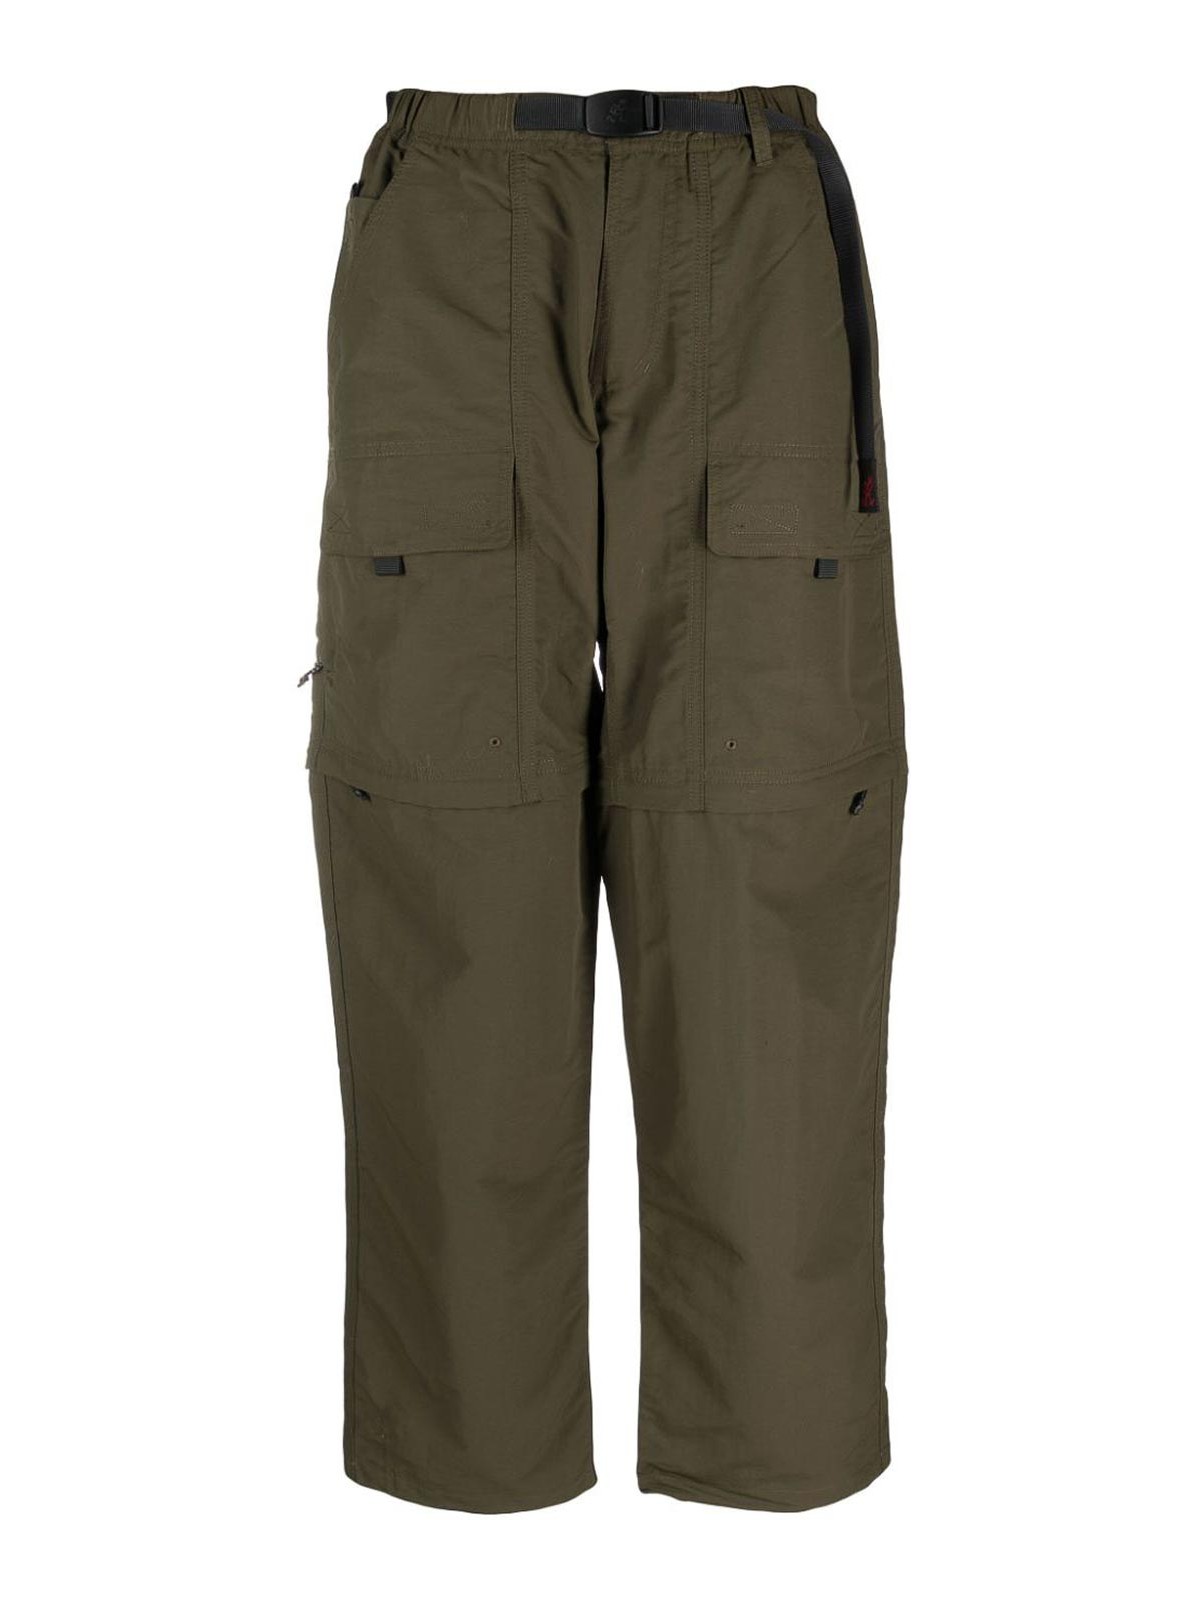 Peter Storm Men's Ramble 2 Convertible Trousers